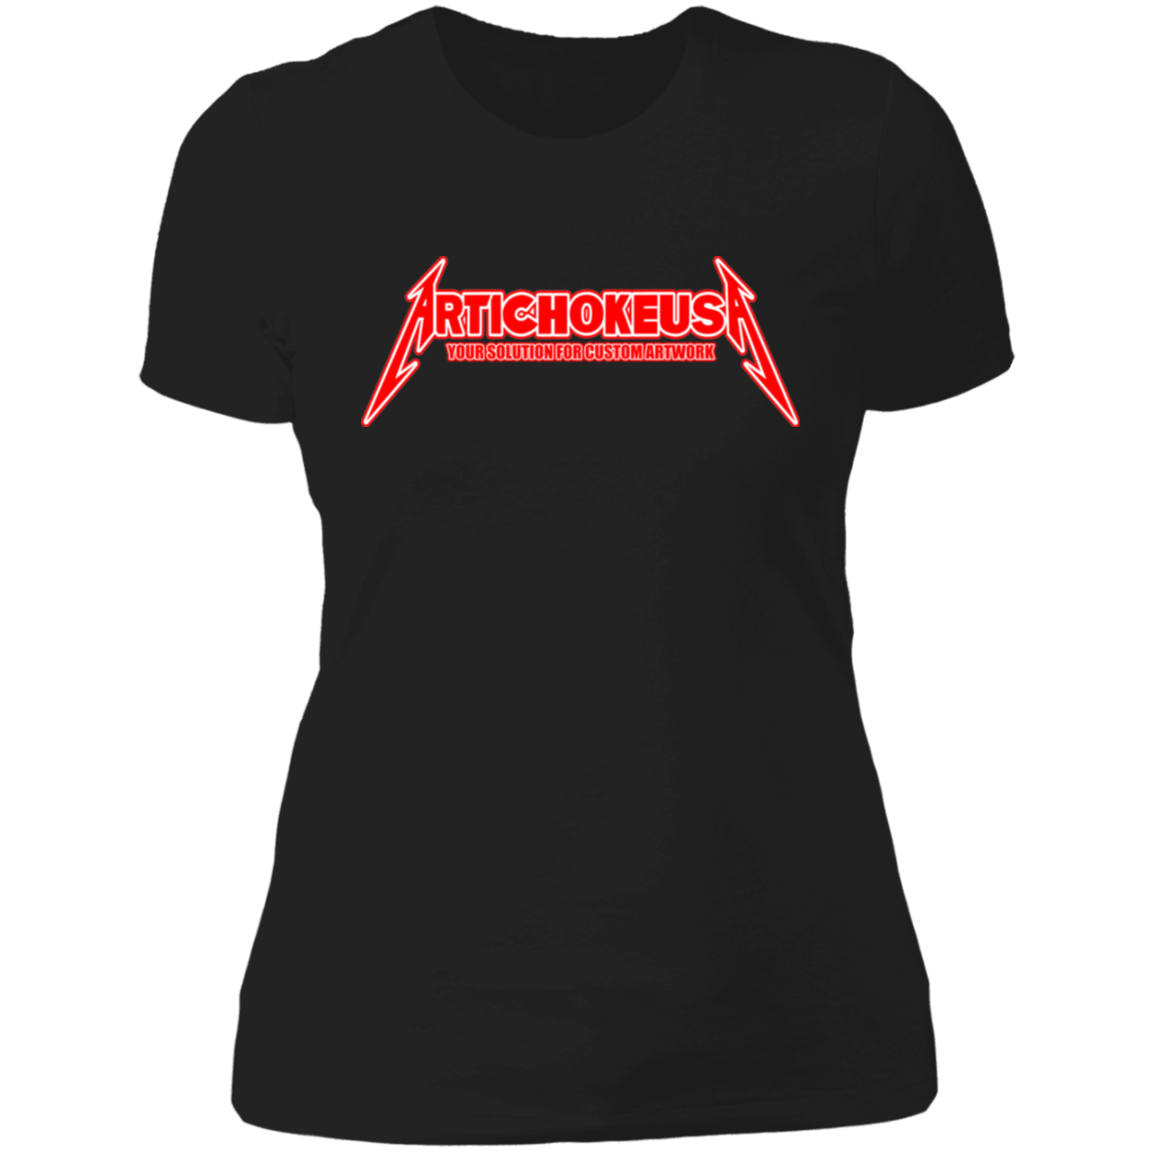 ArtichokeUSA Custom Design. Metallica Style Logo. Let's Make One For Your Project. Ladies' Boyfriend T-Shirt